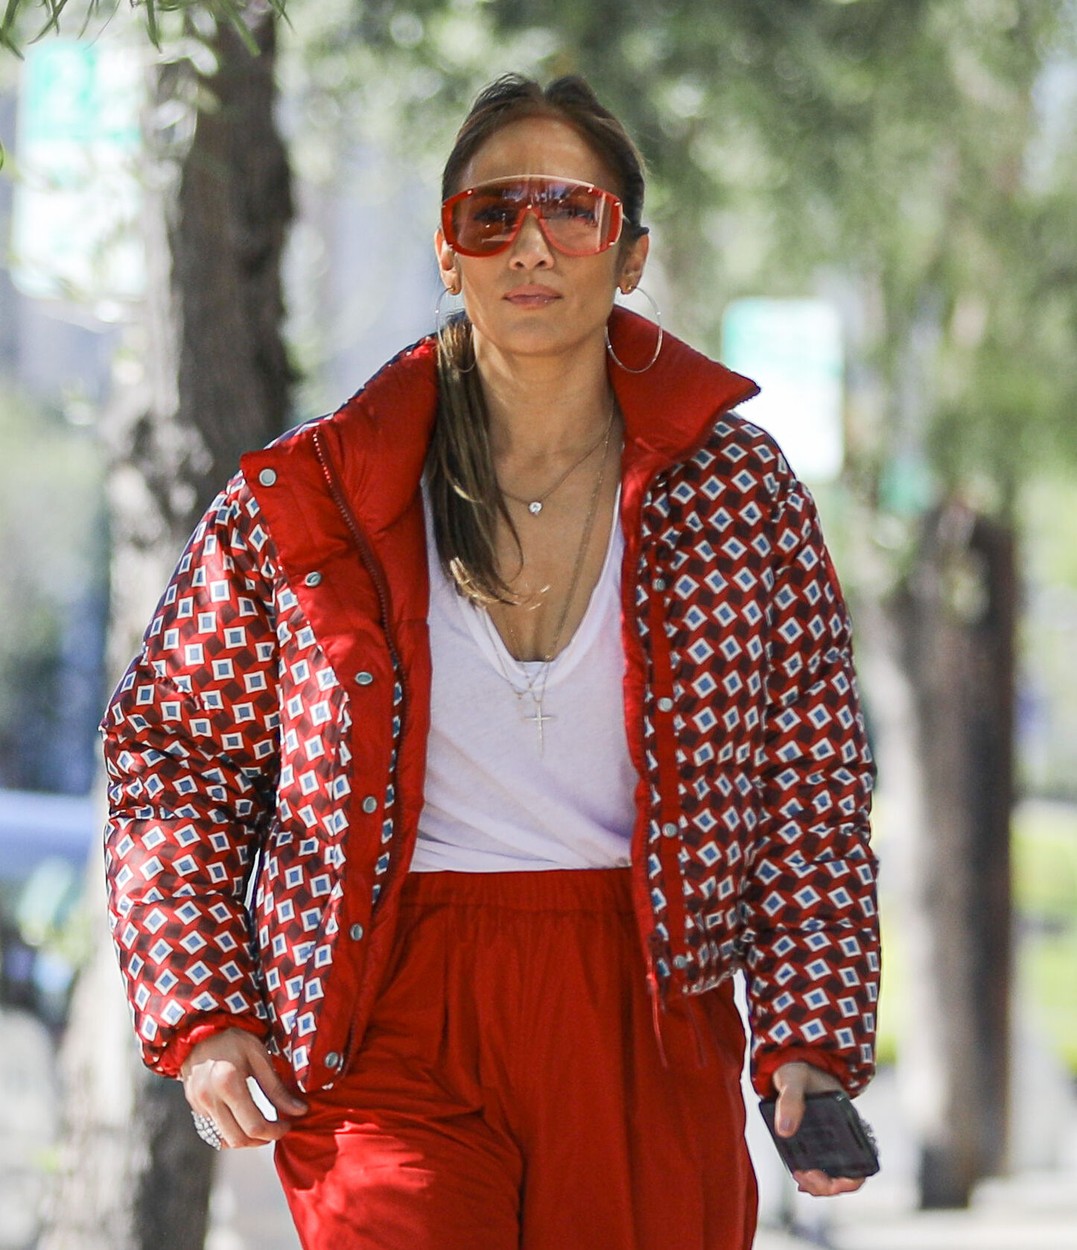 Jennifer Lopez, cu o jachetă roșie și o ținută sport